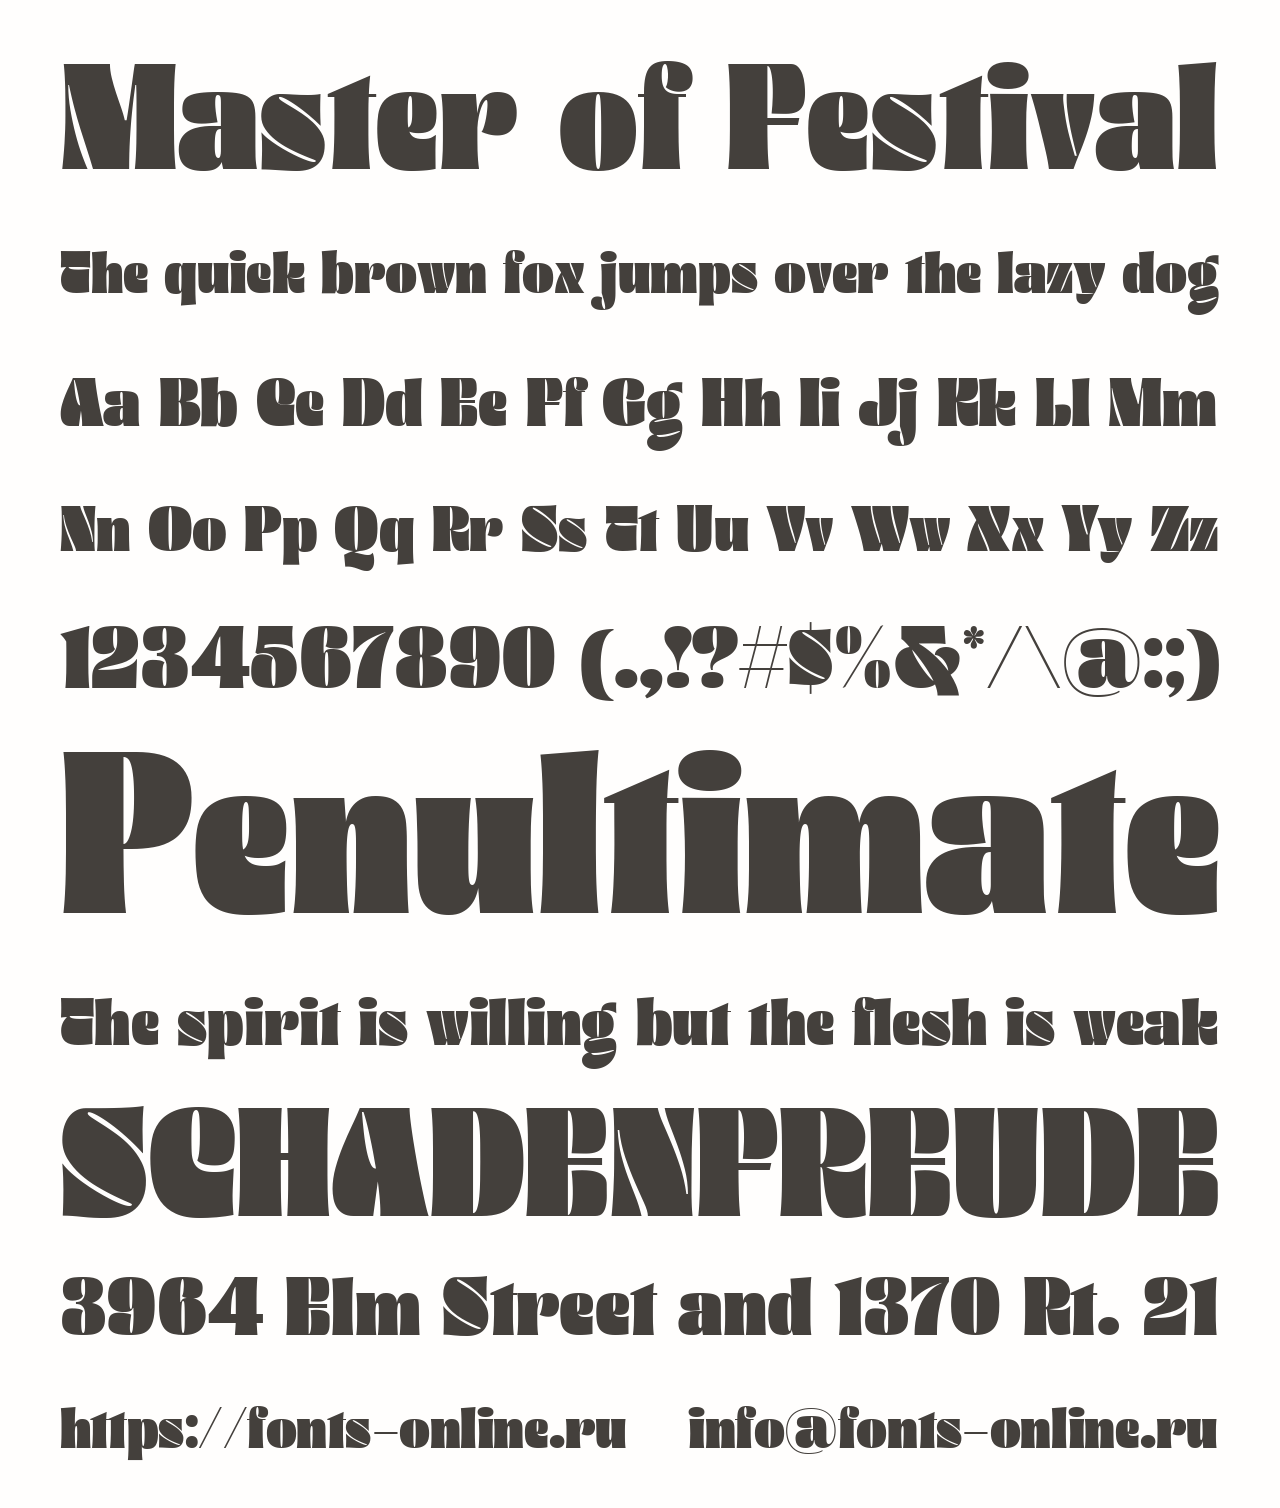 Font Master of Festival